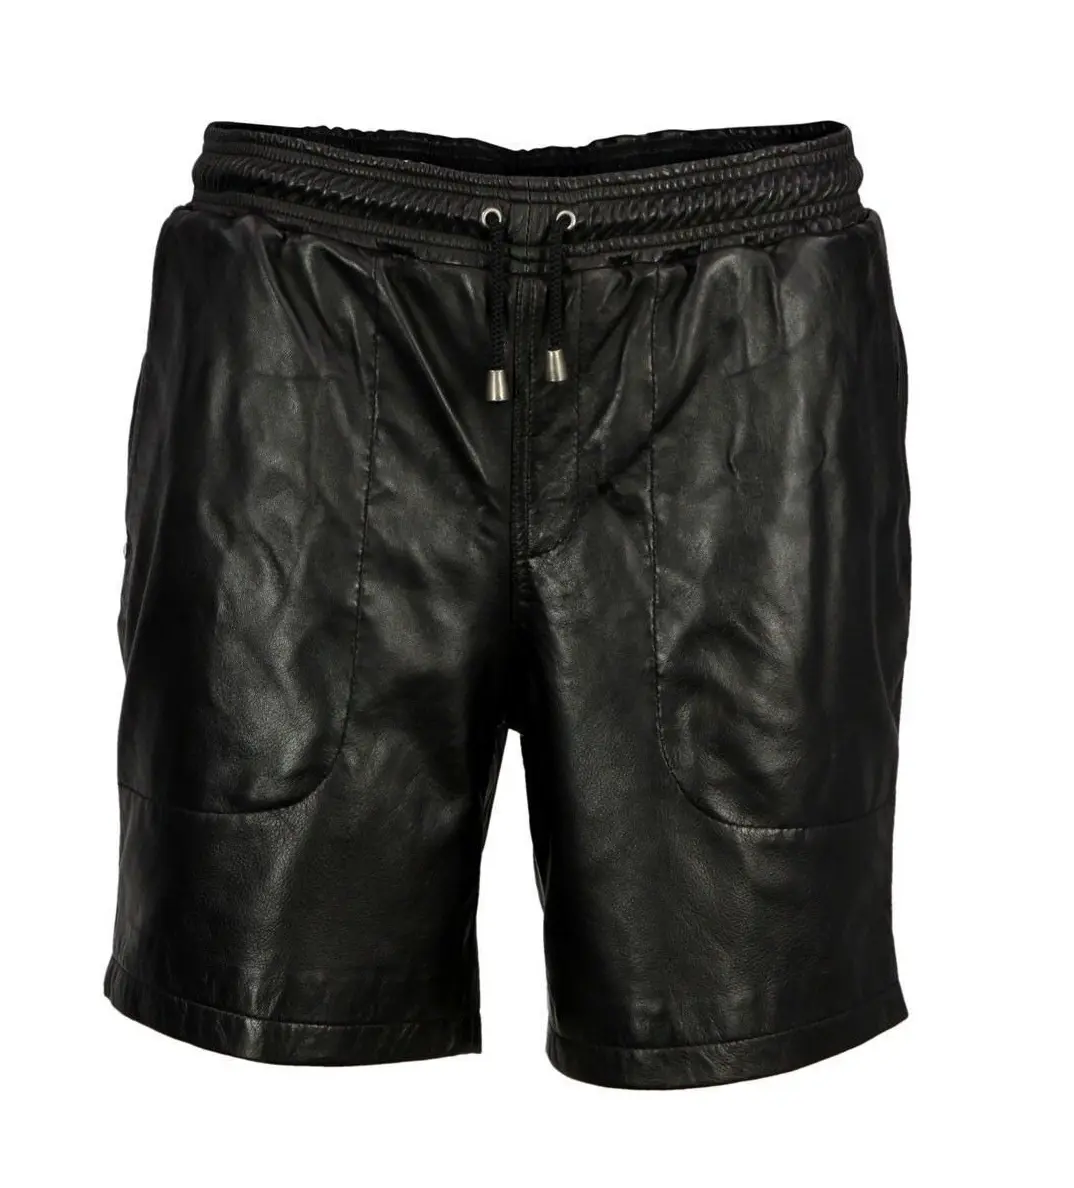 Design New Genuine Handmade Men's Black Lambskin Leather Shorts Premium Soft Sheepskin Slim Fit Sports Gym Jogging Wear Shorts